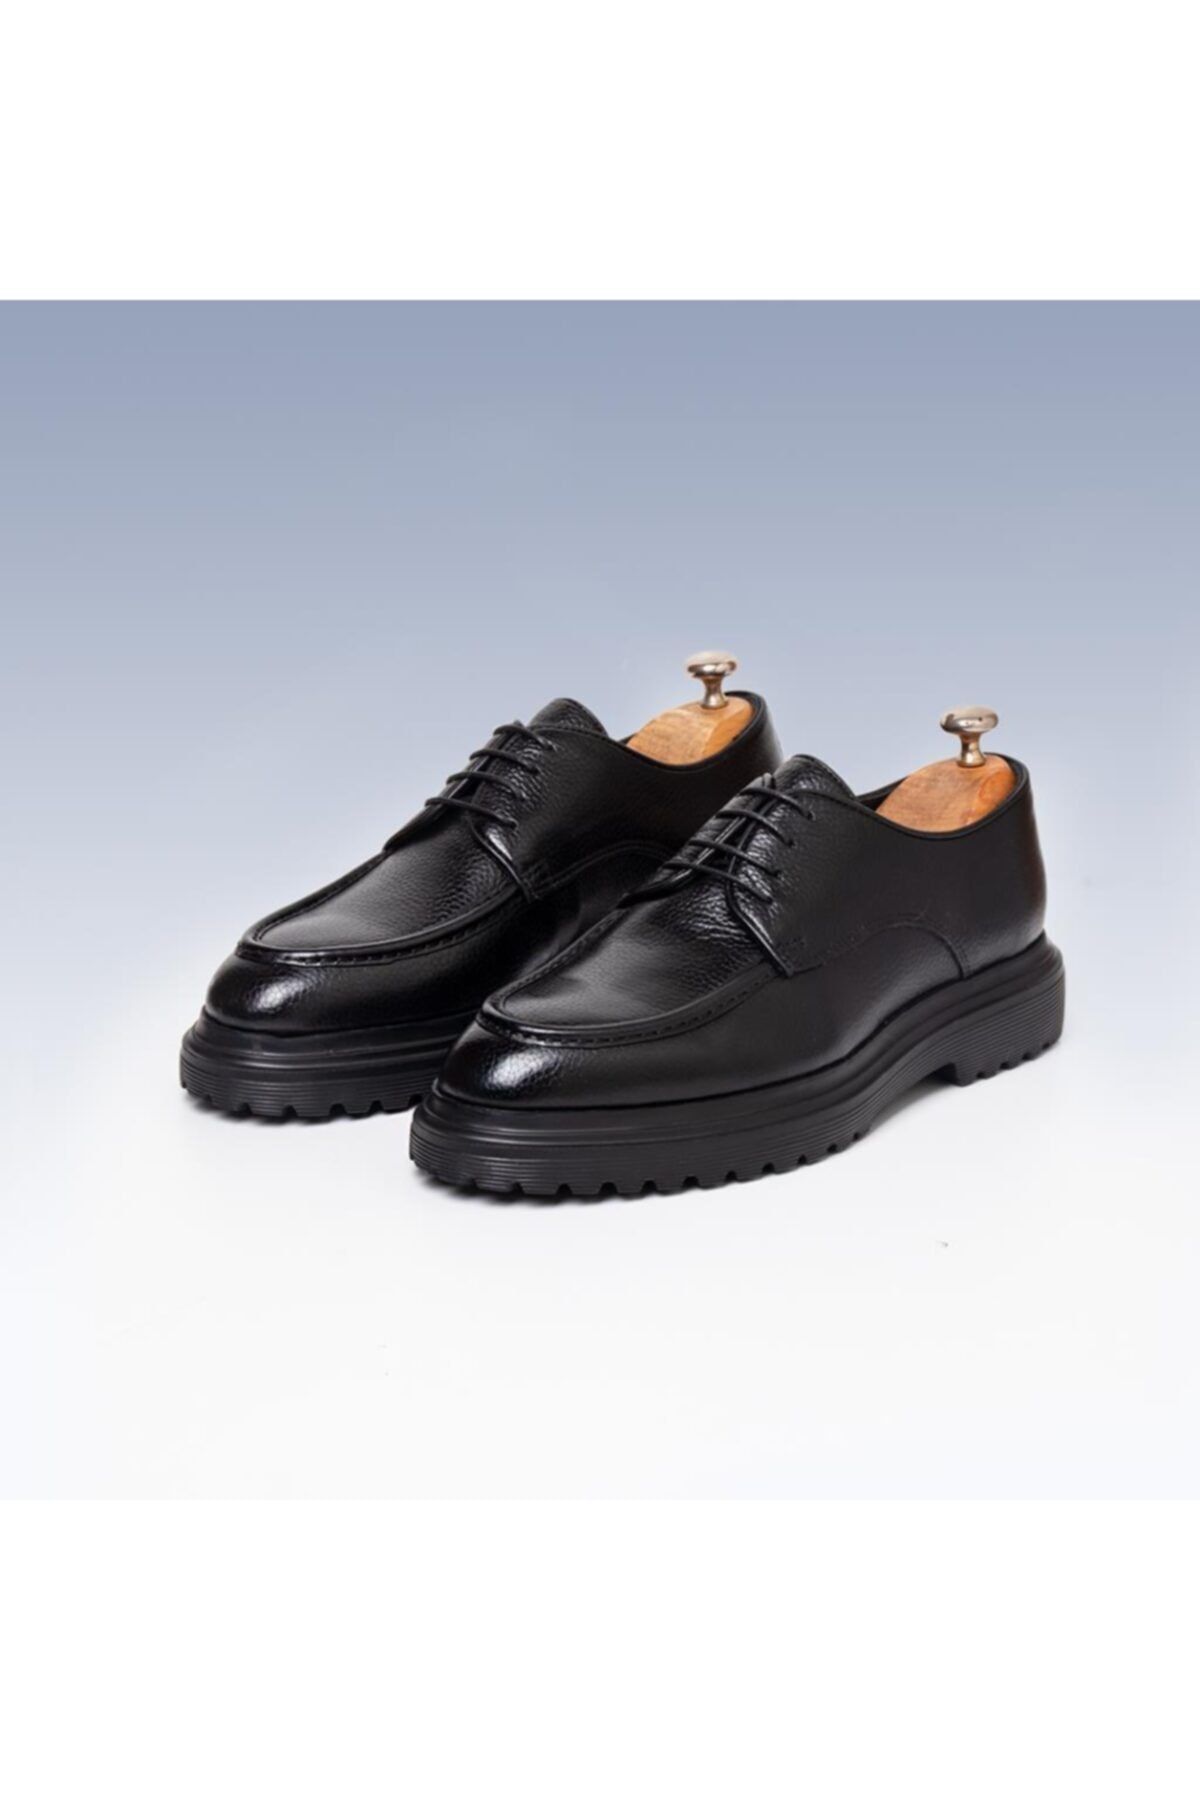 İBAY 049 Lıon Erkek Siyah Hakiki Deri Klasik Rahat Ayakkabı